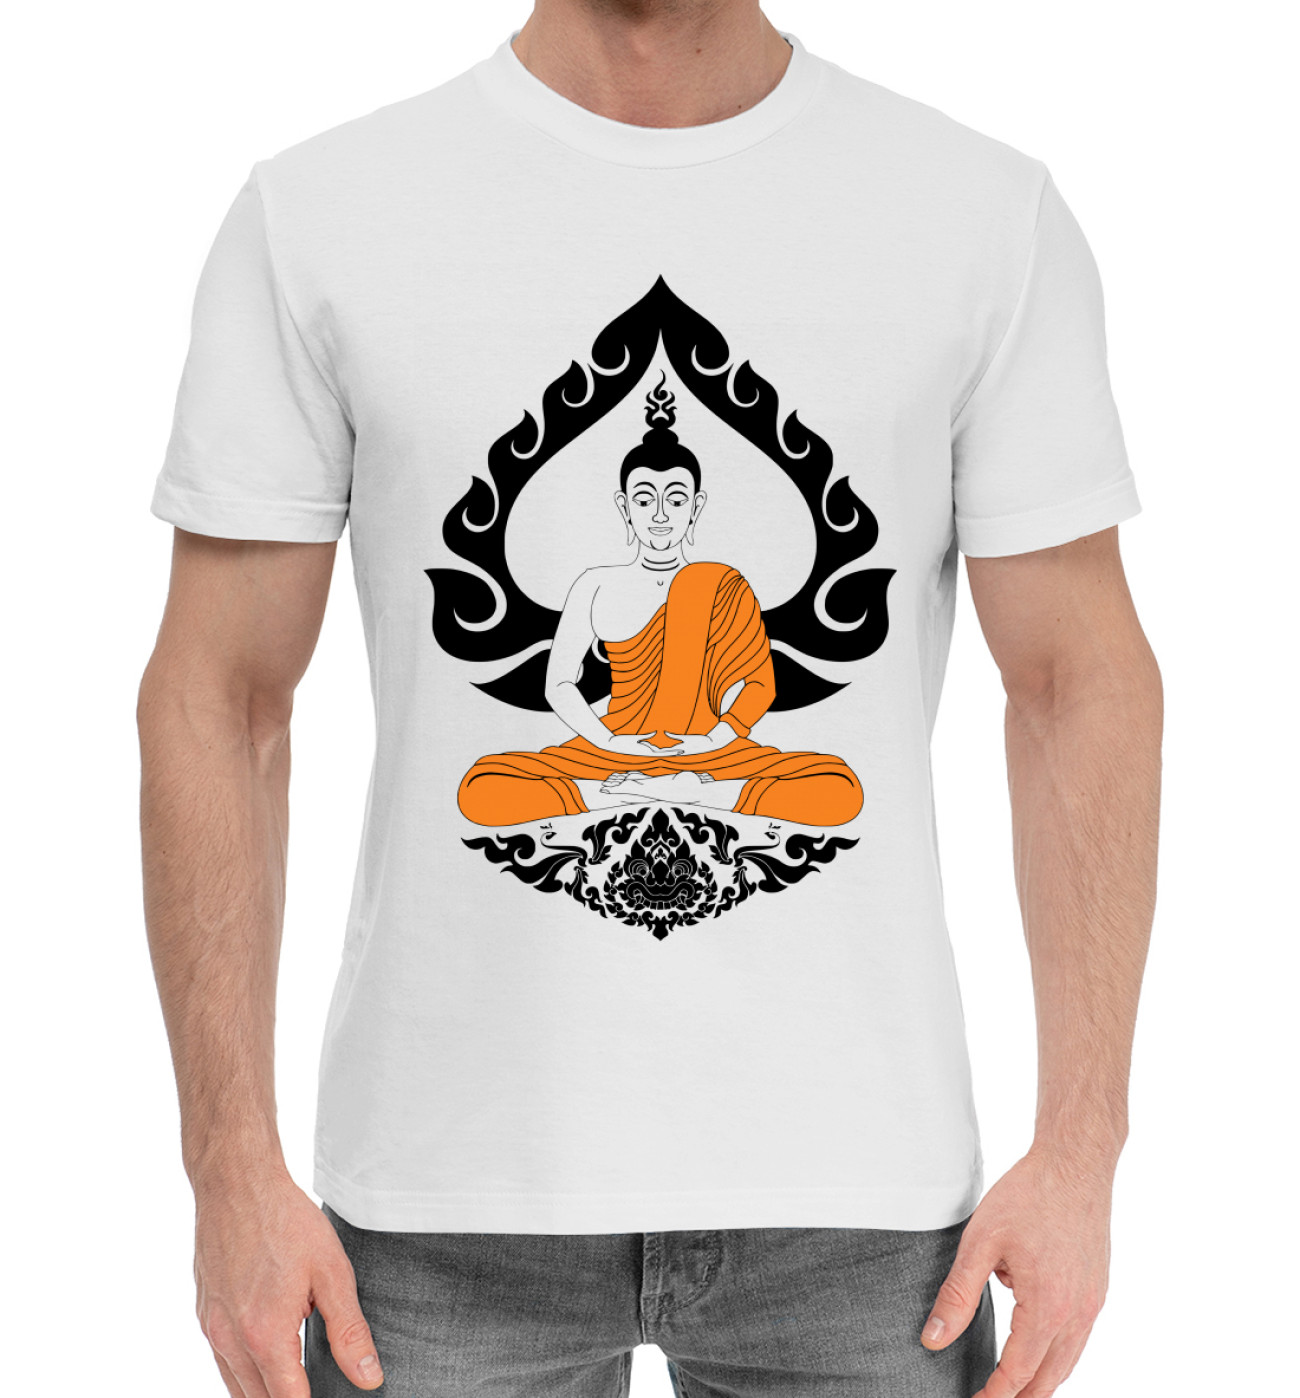 Мужская Хлопковая футболка Медитация, артикул: PSY-229091-hfu-2